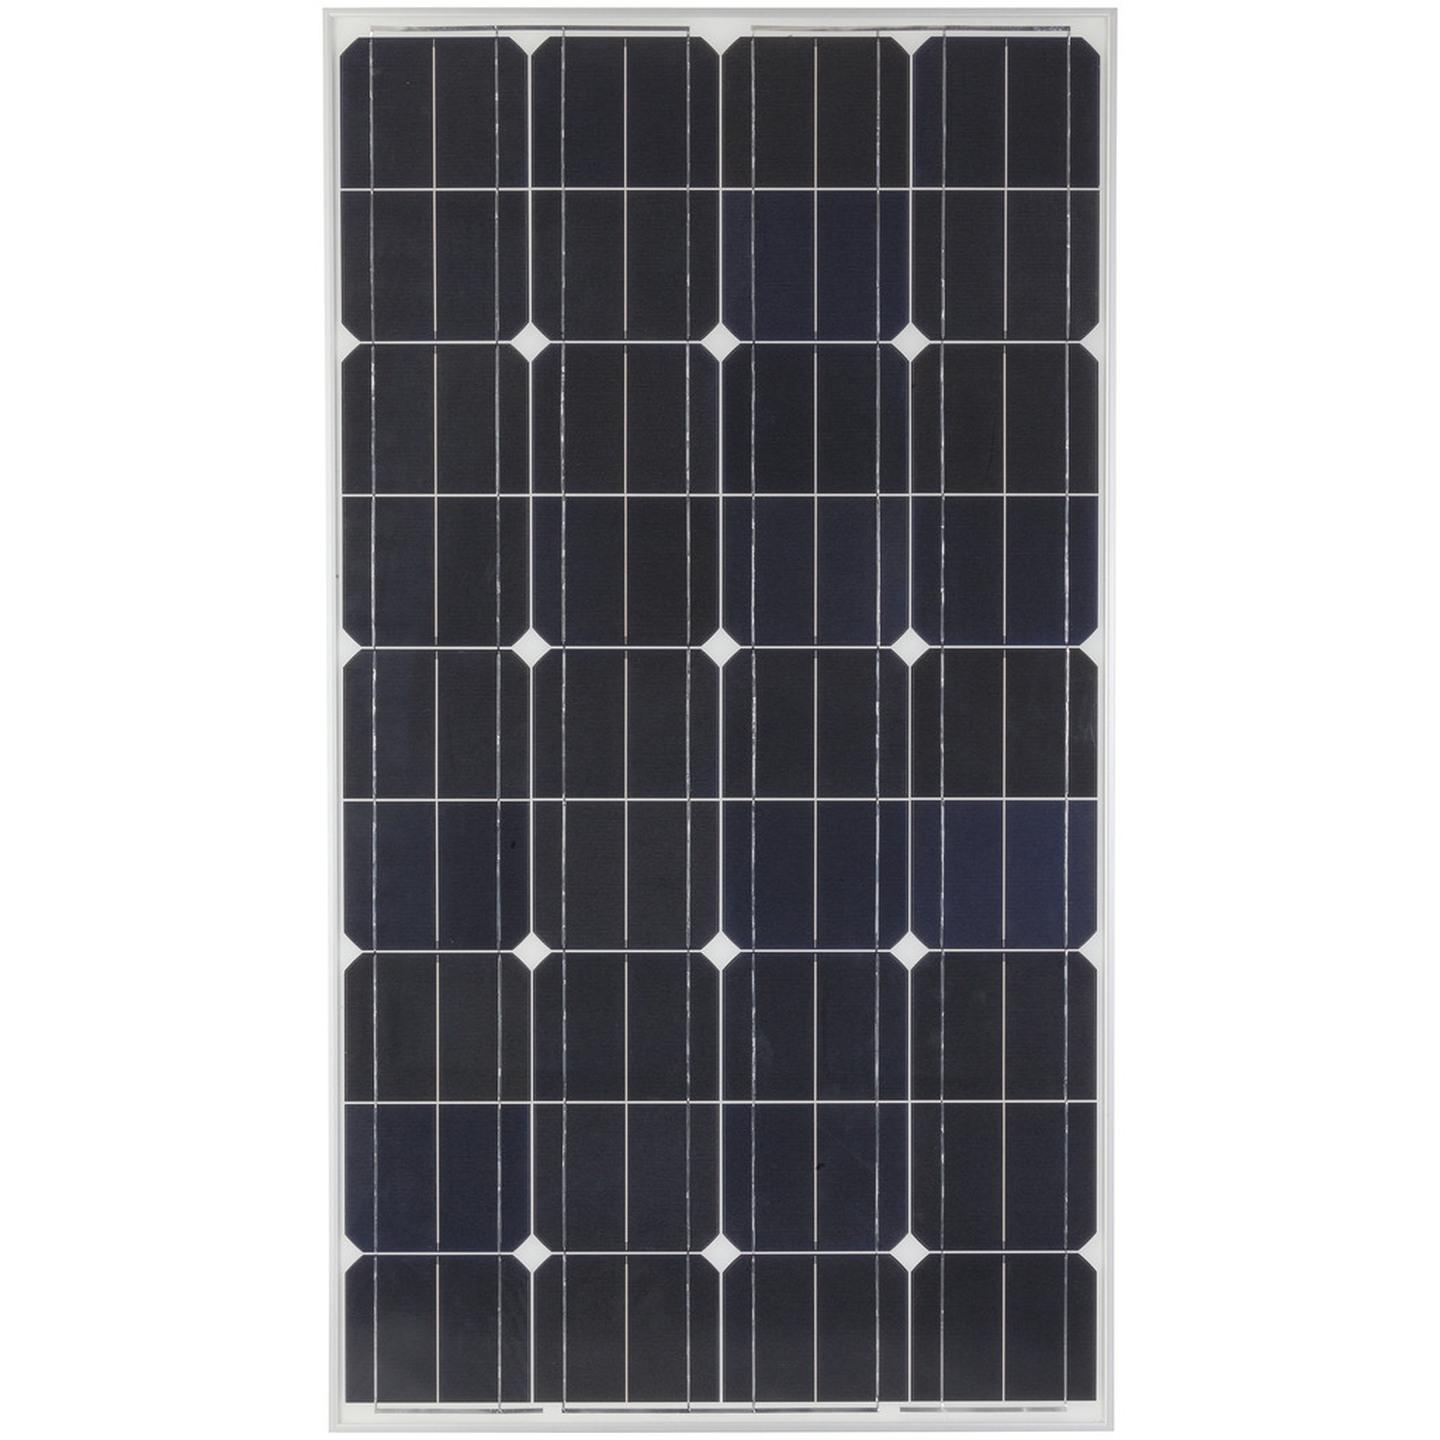 Powertech 120W 12V Mono-crystalline Narrow Solar Panel